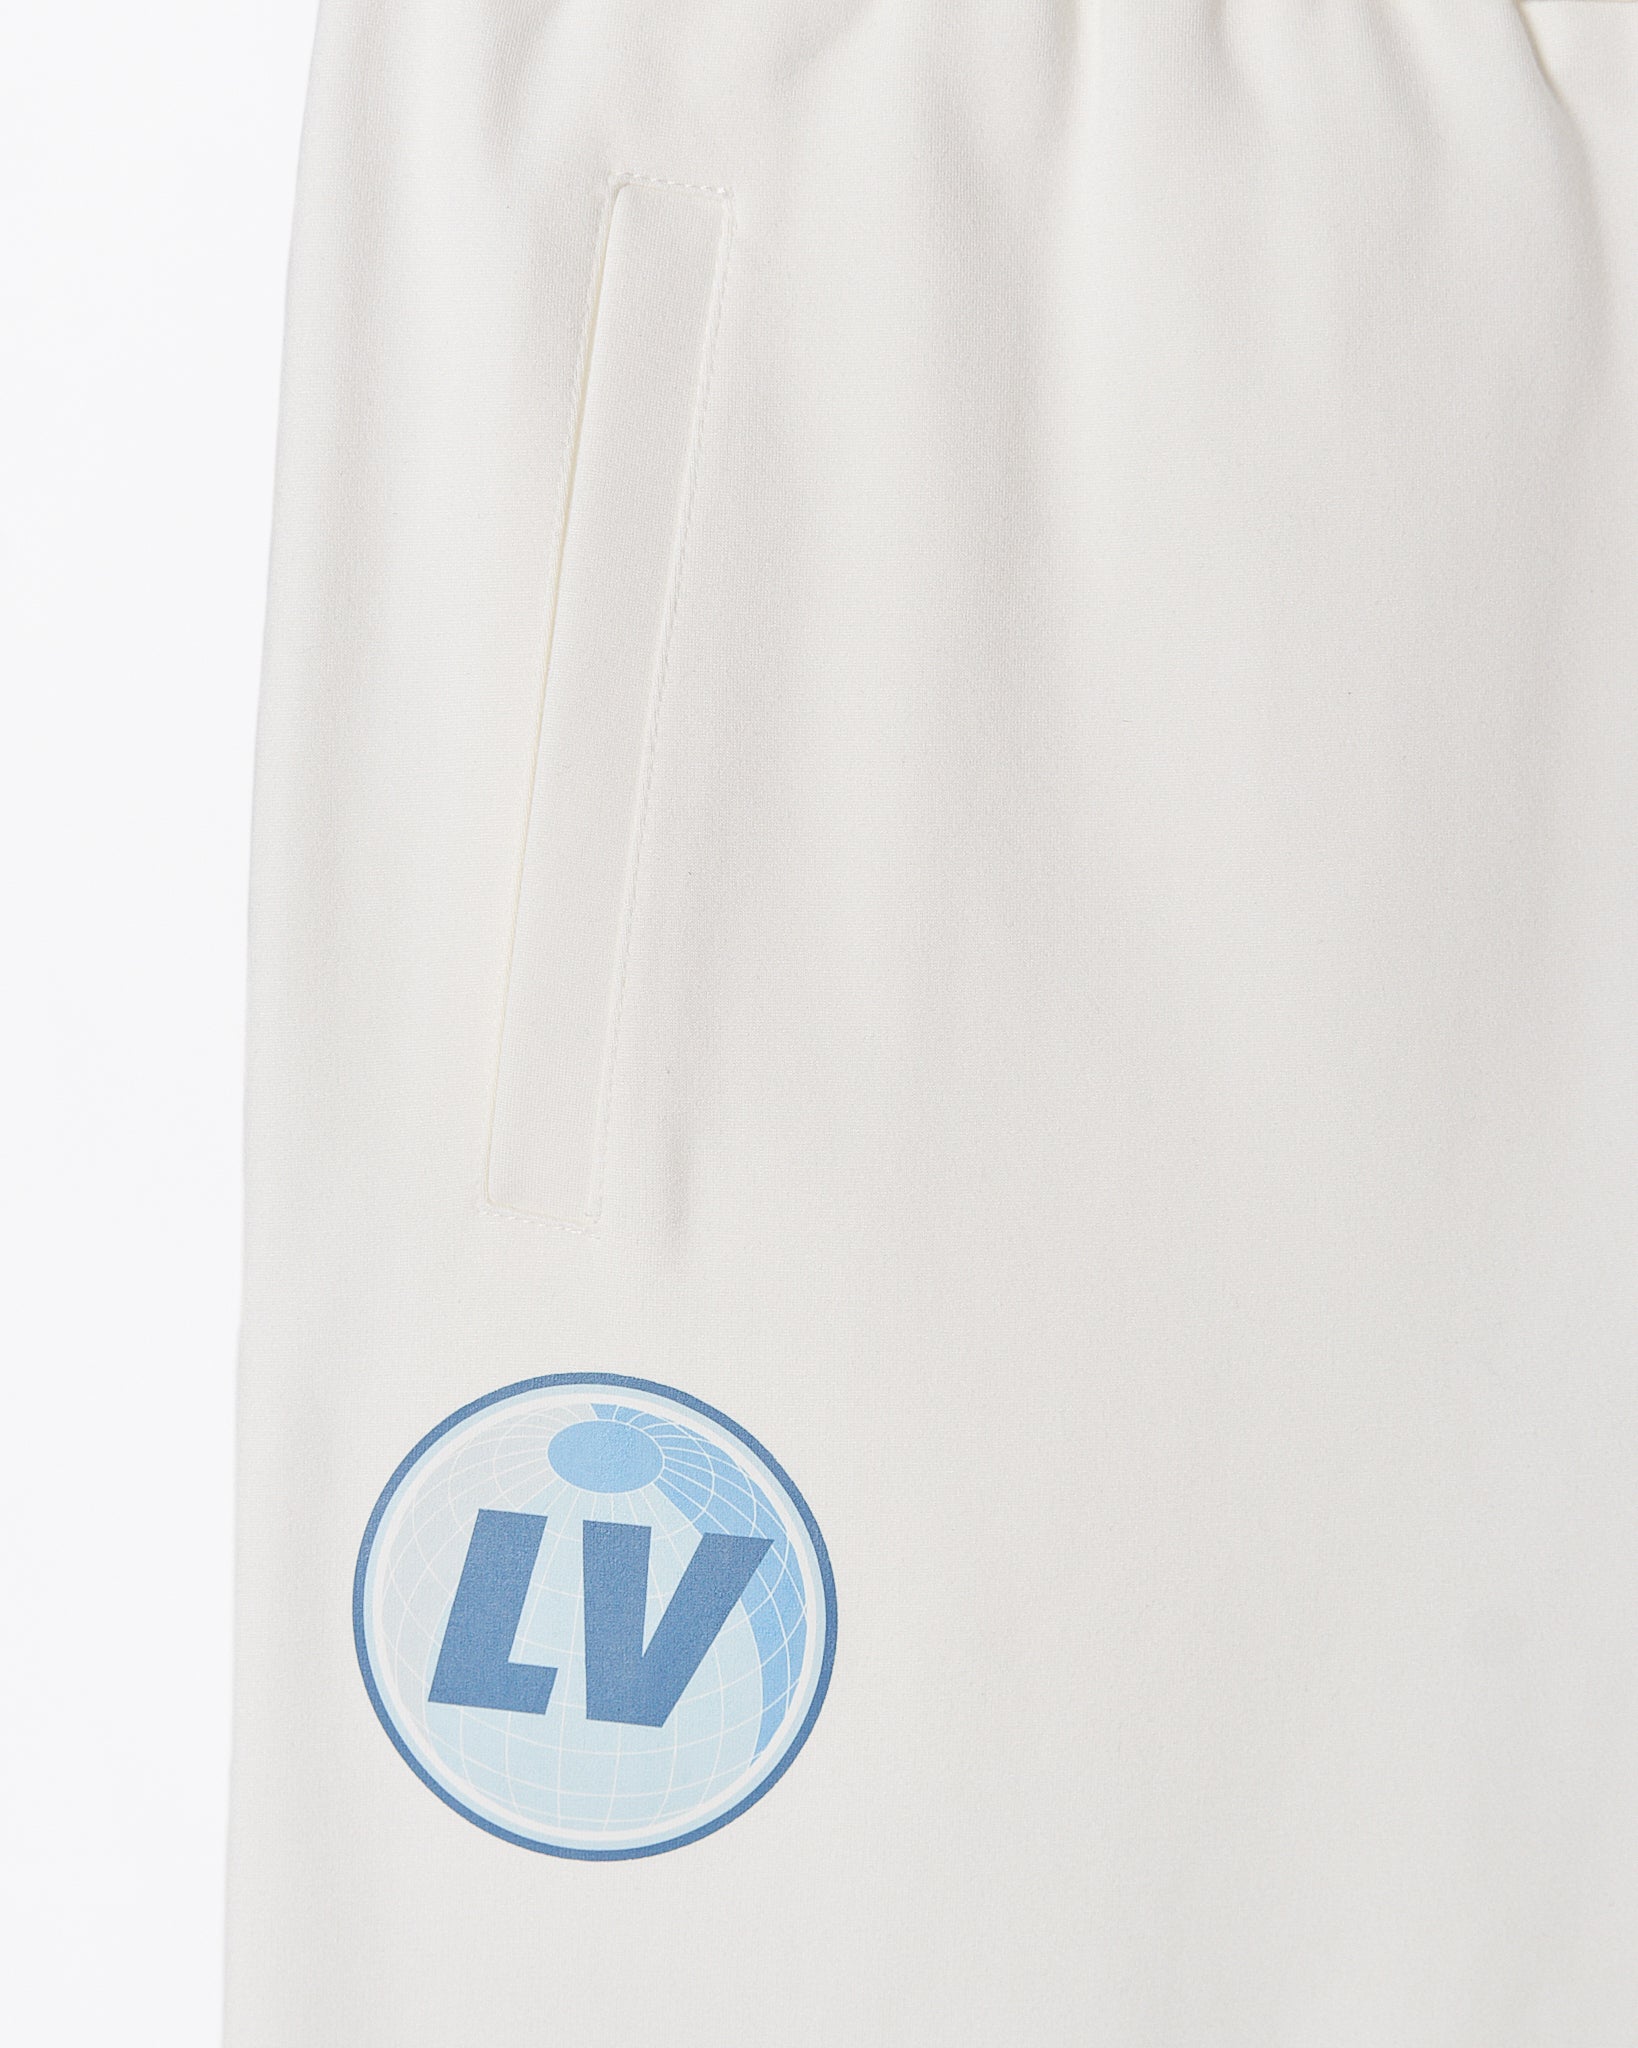 LV Cloudy Logo Printed White Joggers 68.90